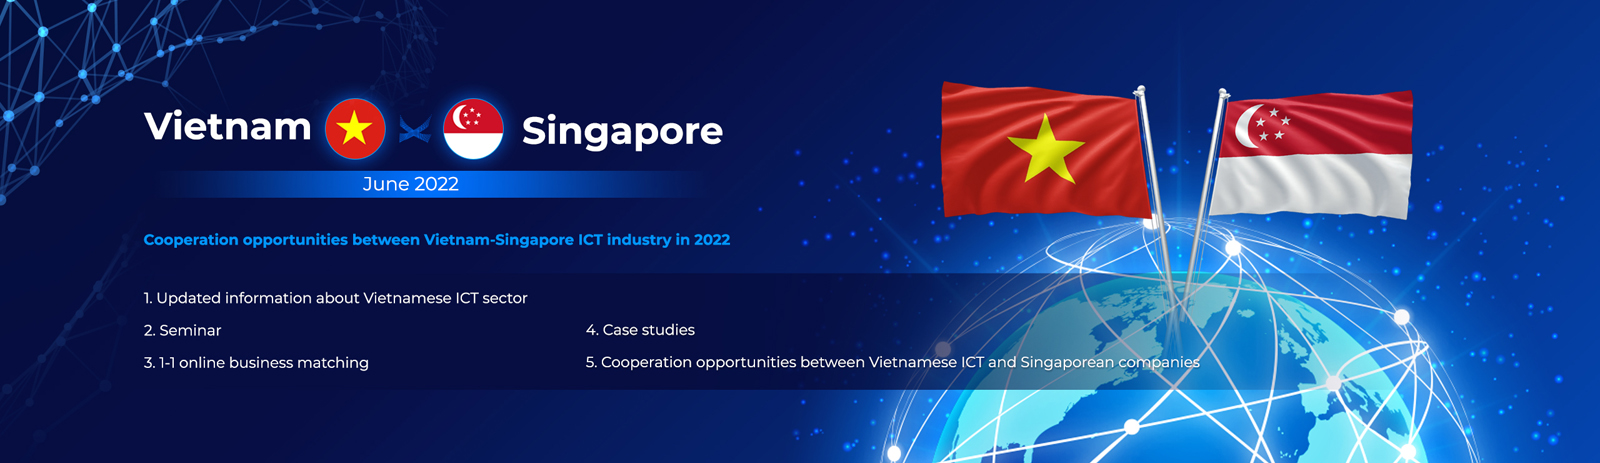 Virtual Business Mission - Singapore (2022)